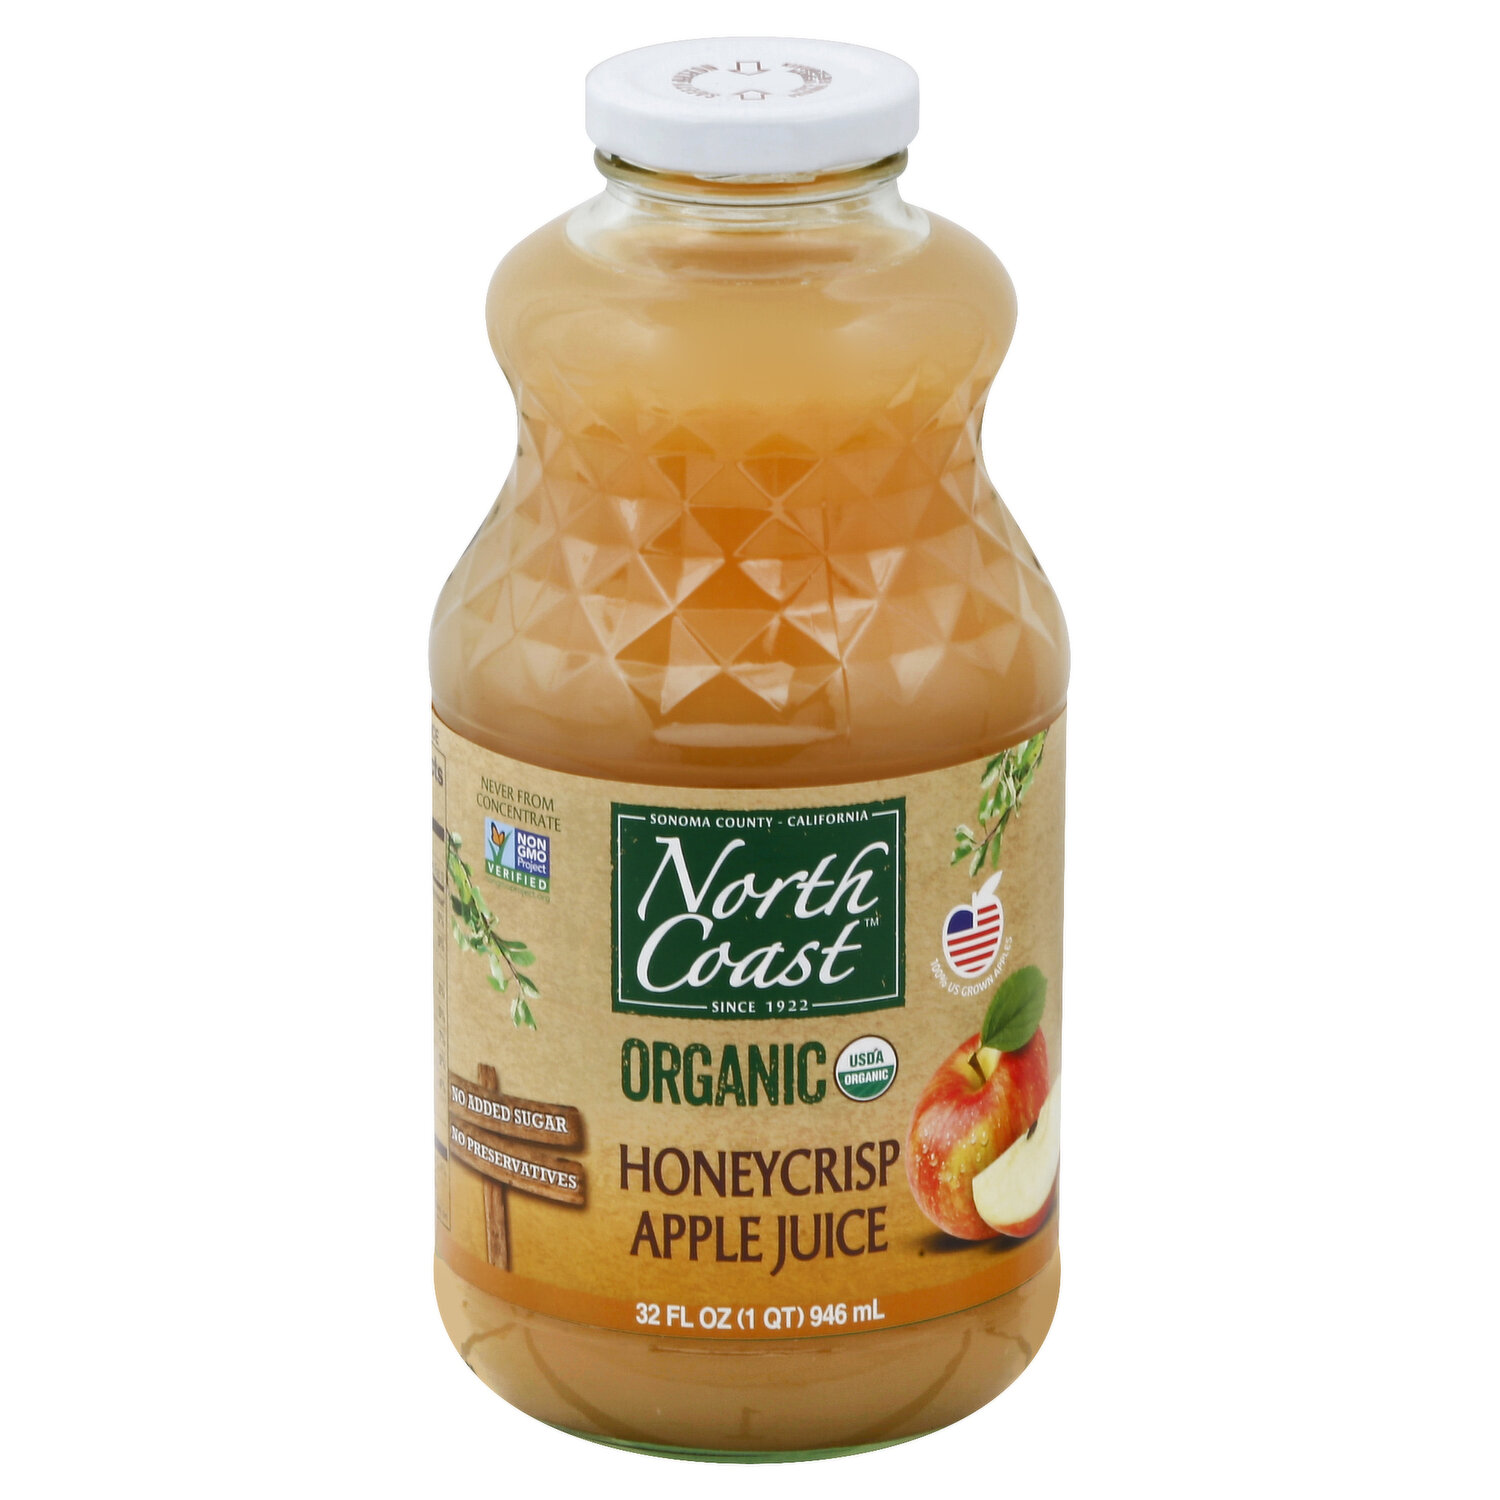 Honeycrisp Apples, Organic Apples